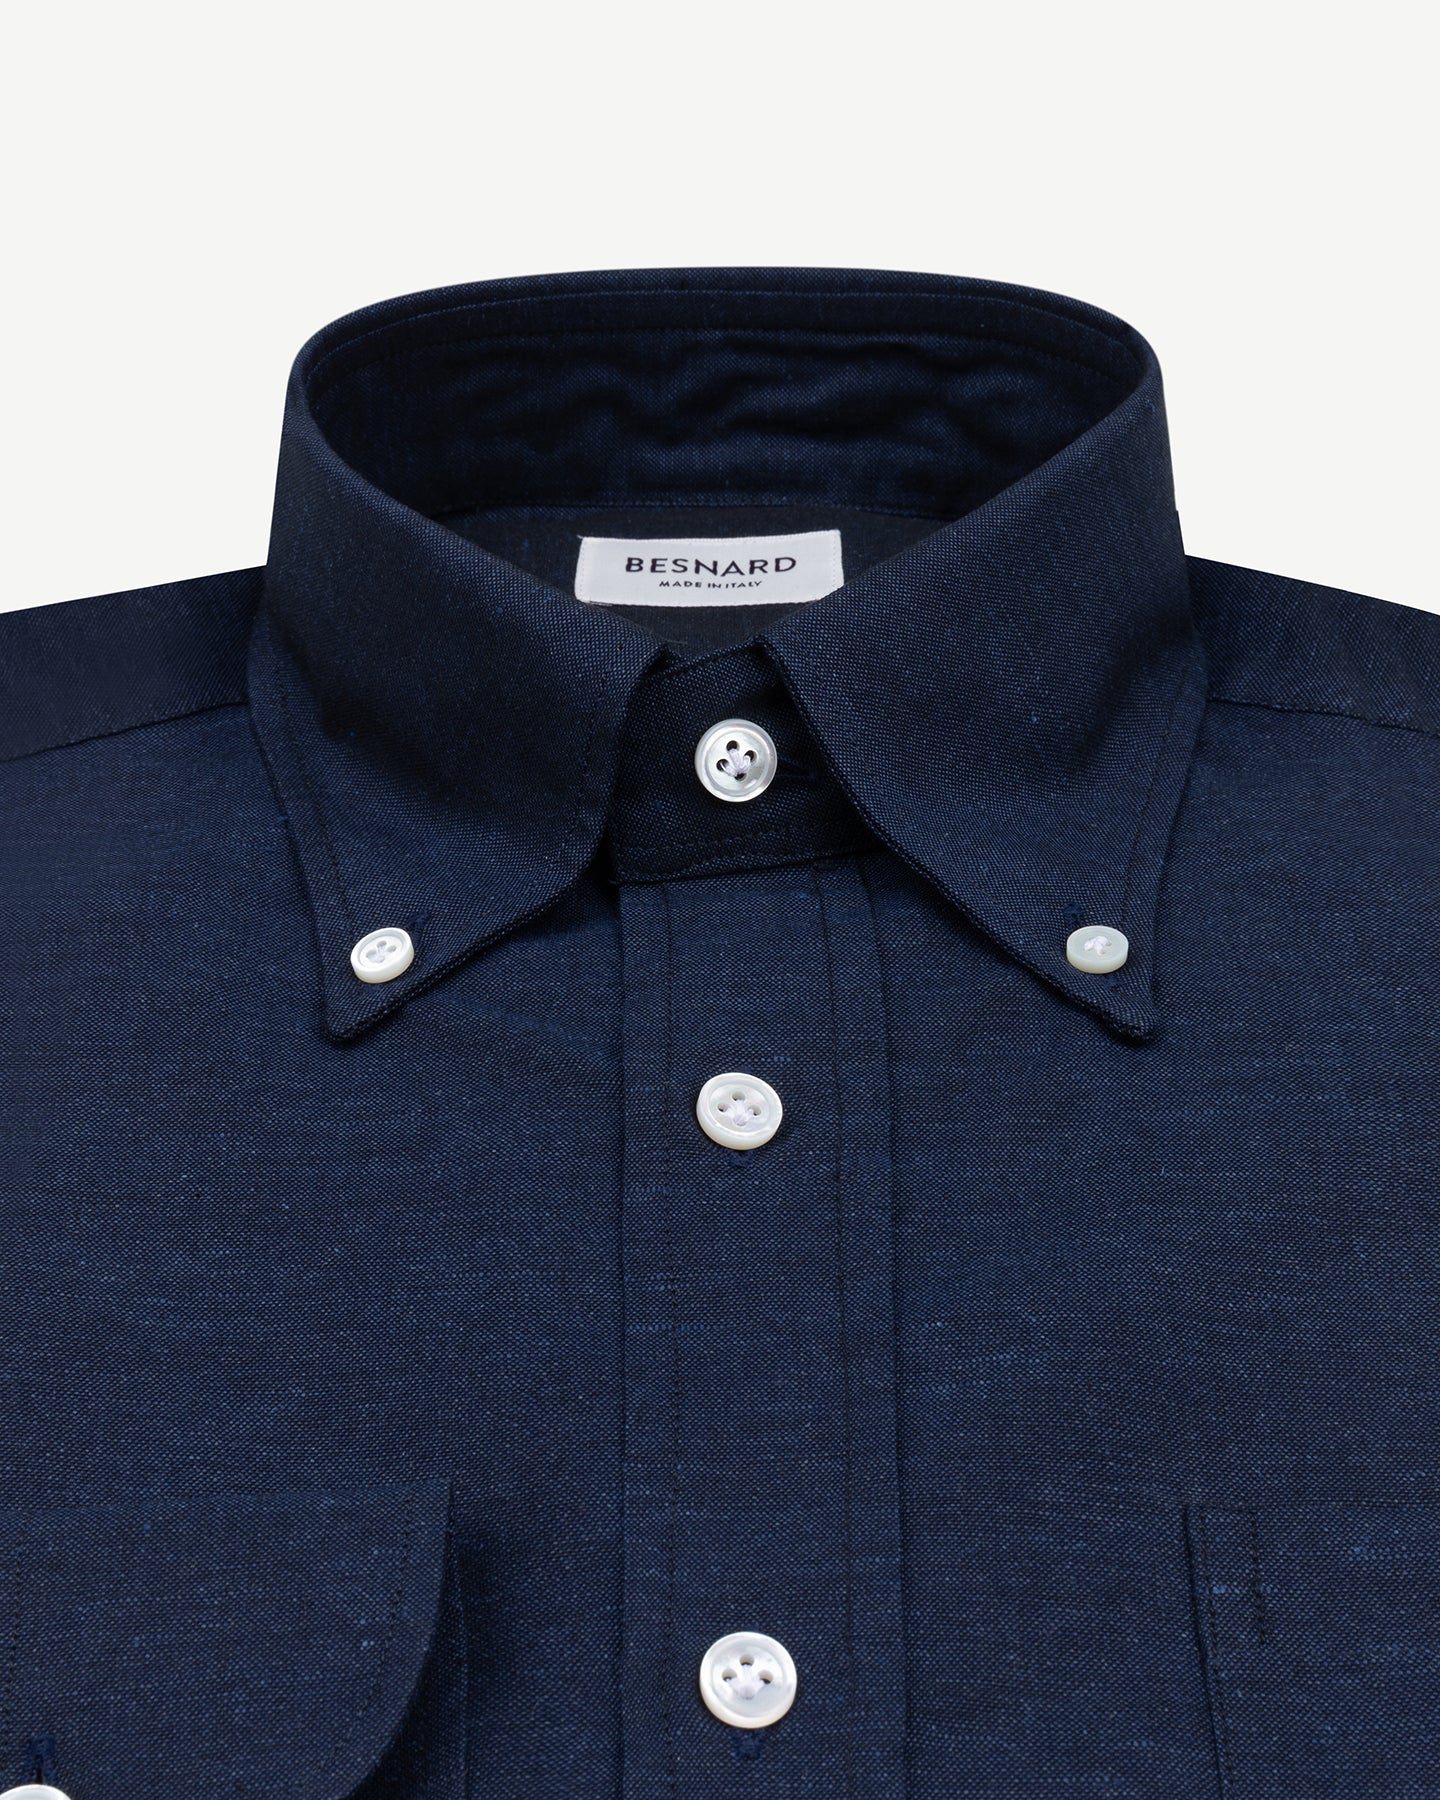 Navy cotton linen shirt with button down collar